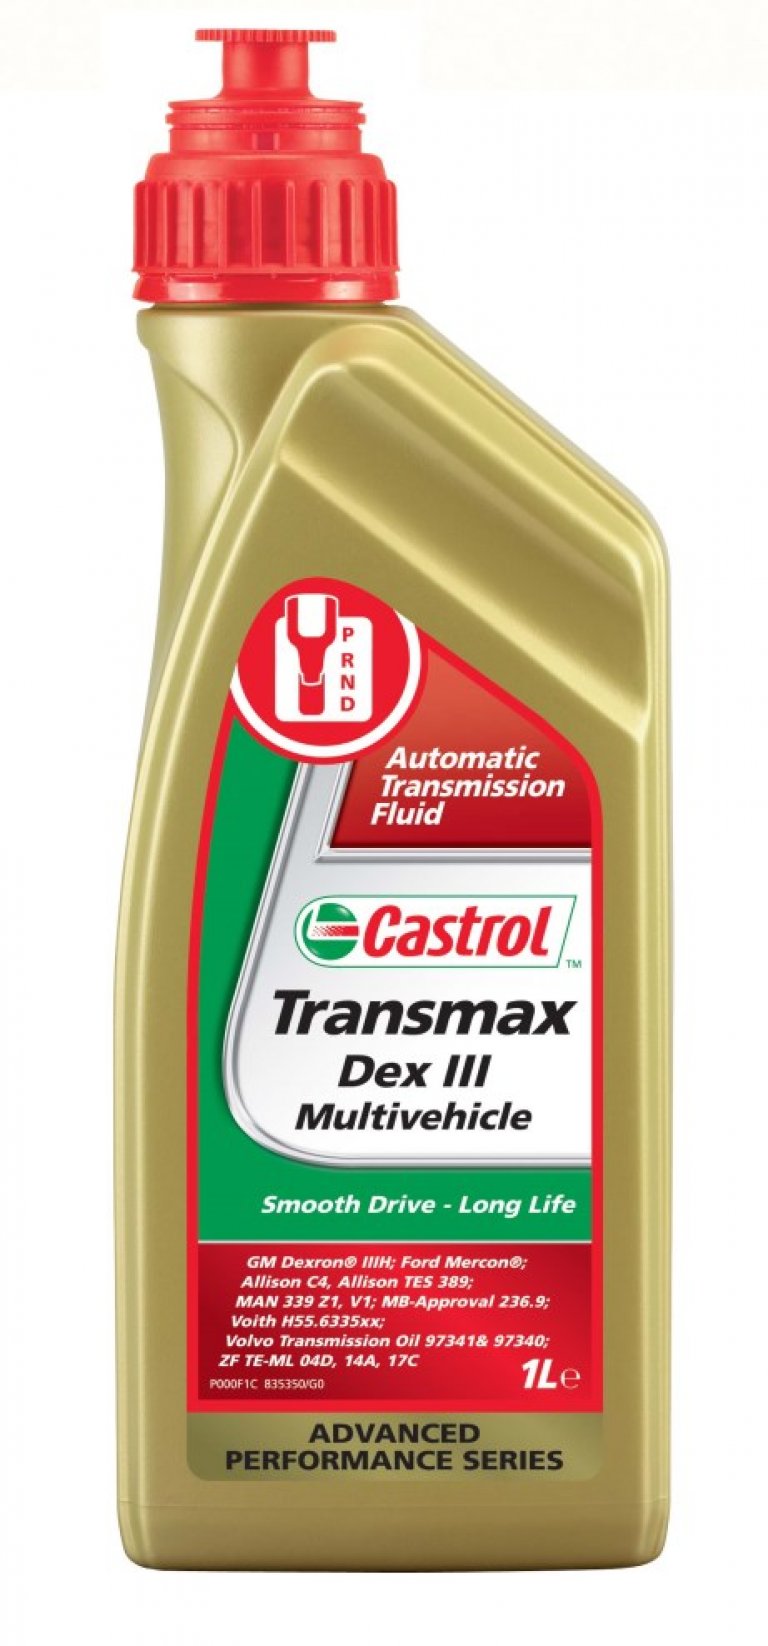 157AB3 Масло трансмиссионное синтетическоеTransmax ATF Dex III Multivehicle, 1л Castrol - detaluga.ru